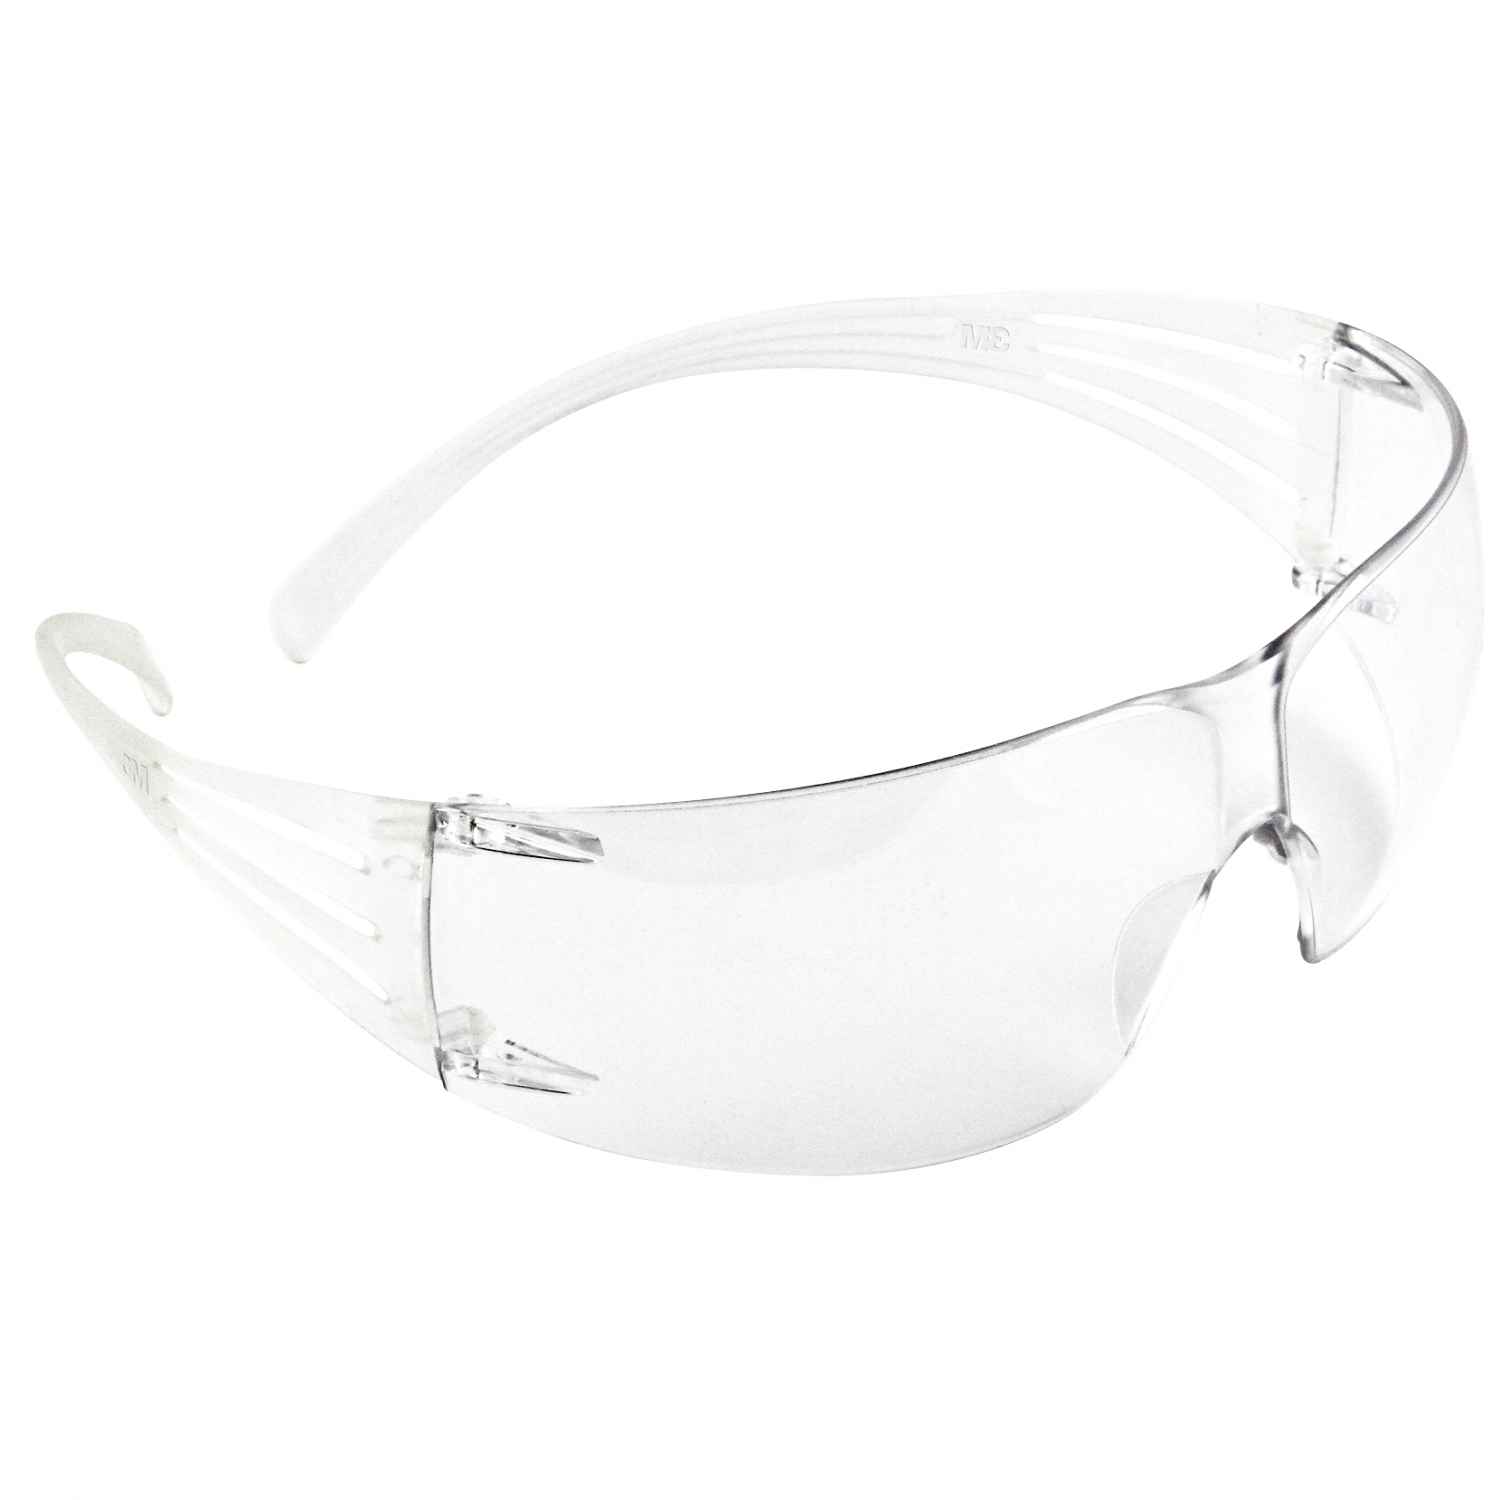 3M SecureFit Safety Glasses 200 (clear) 